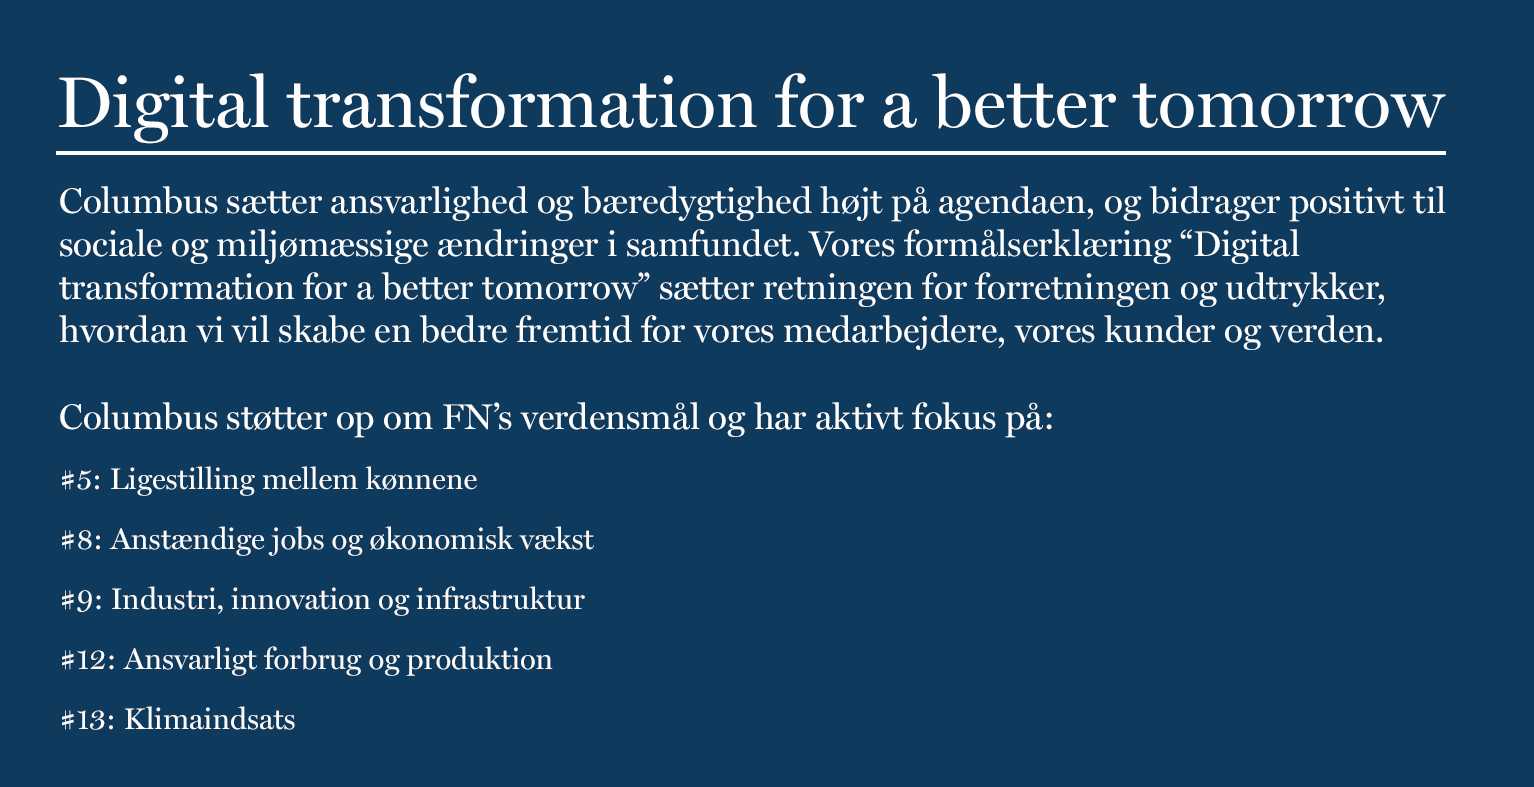 Digital transformation for a better tomorrow